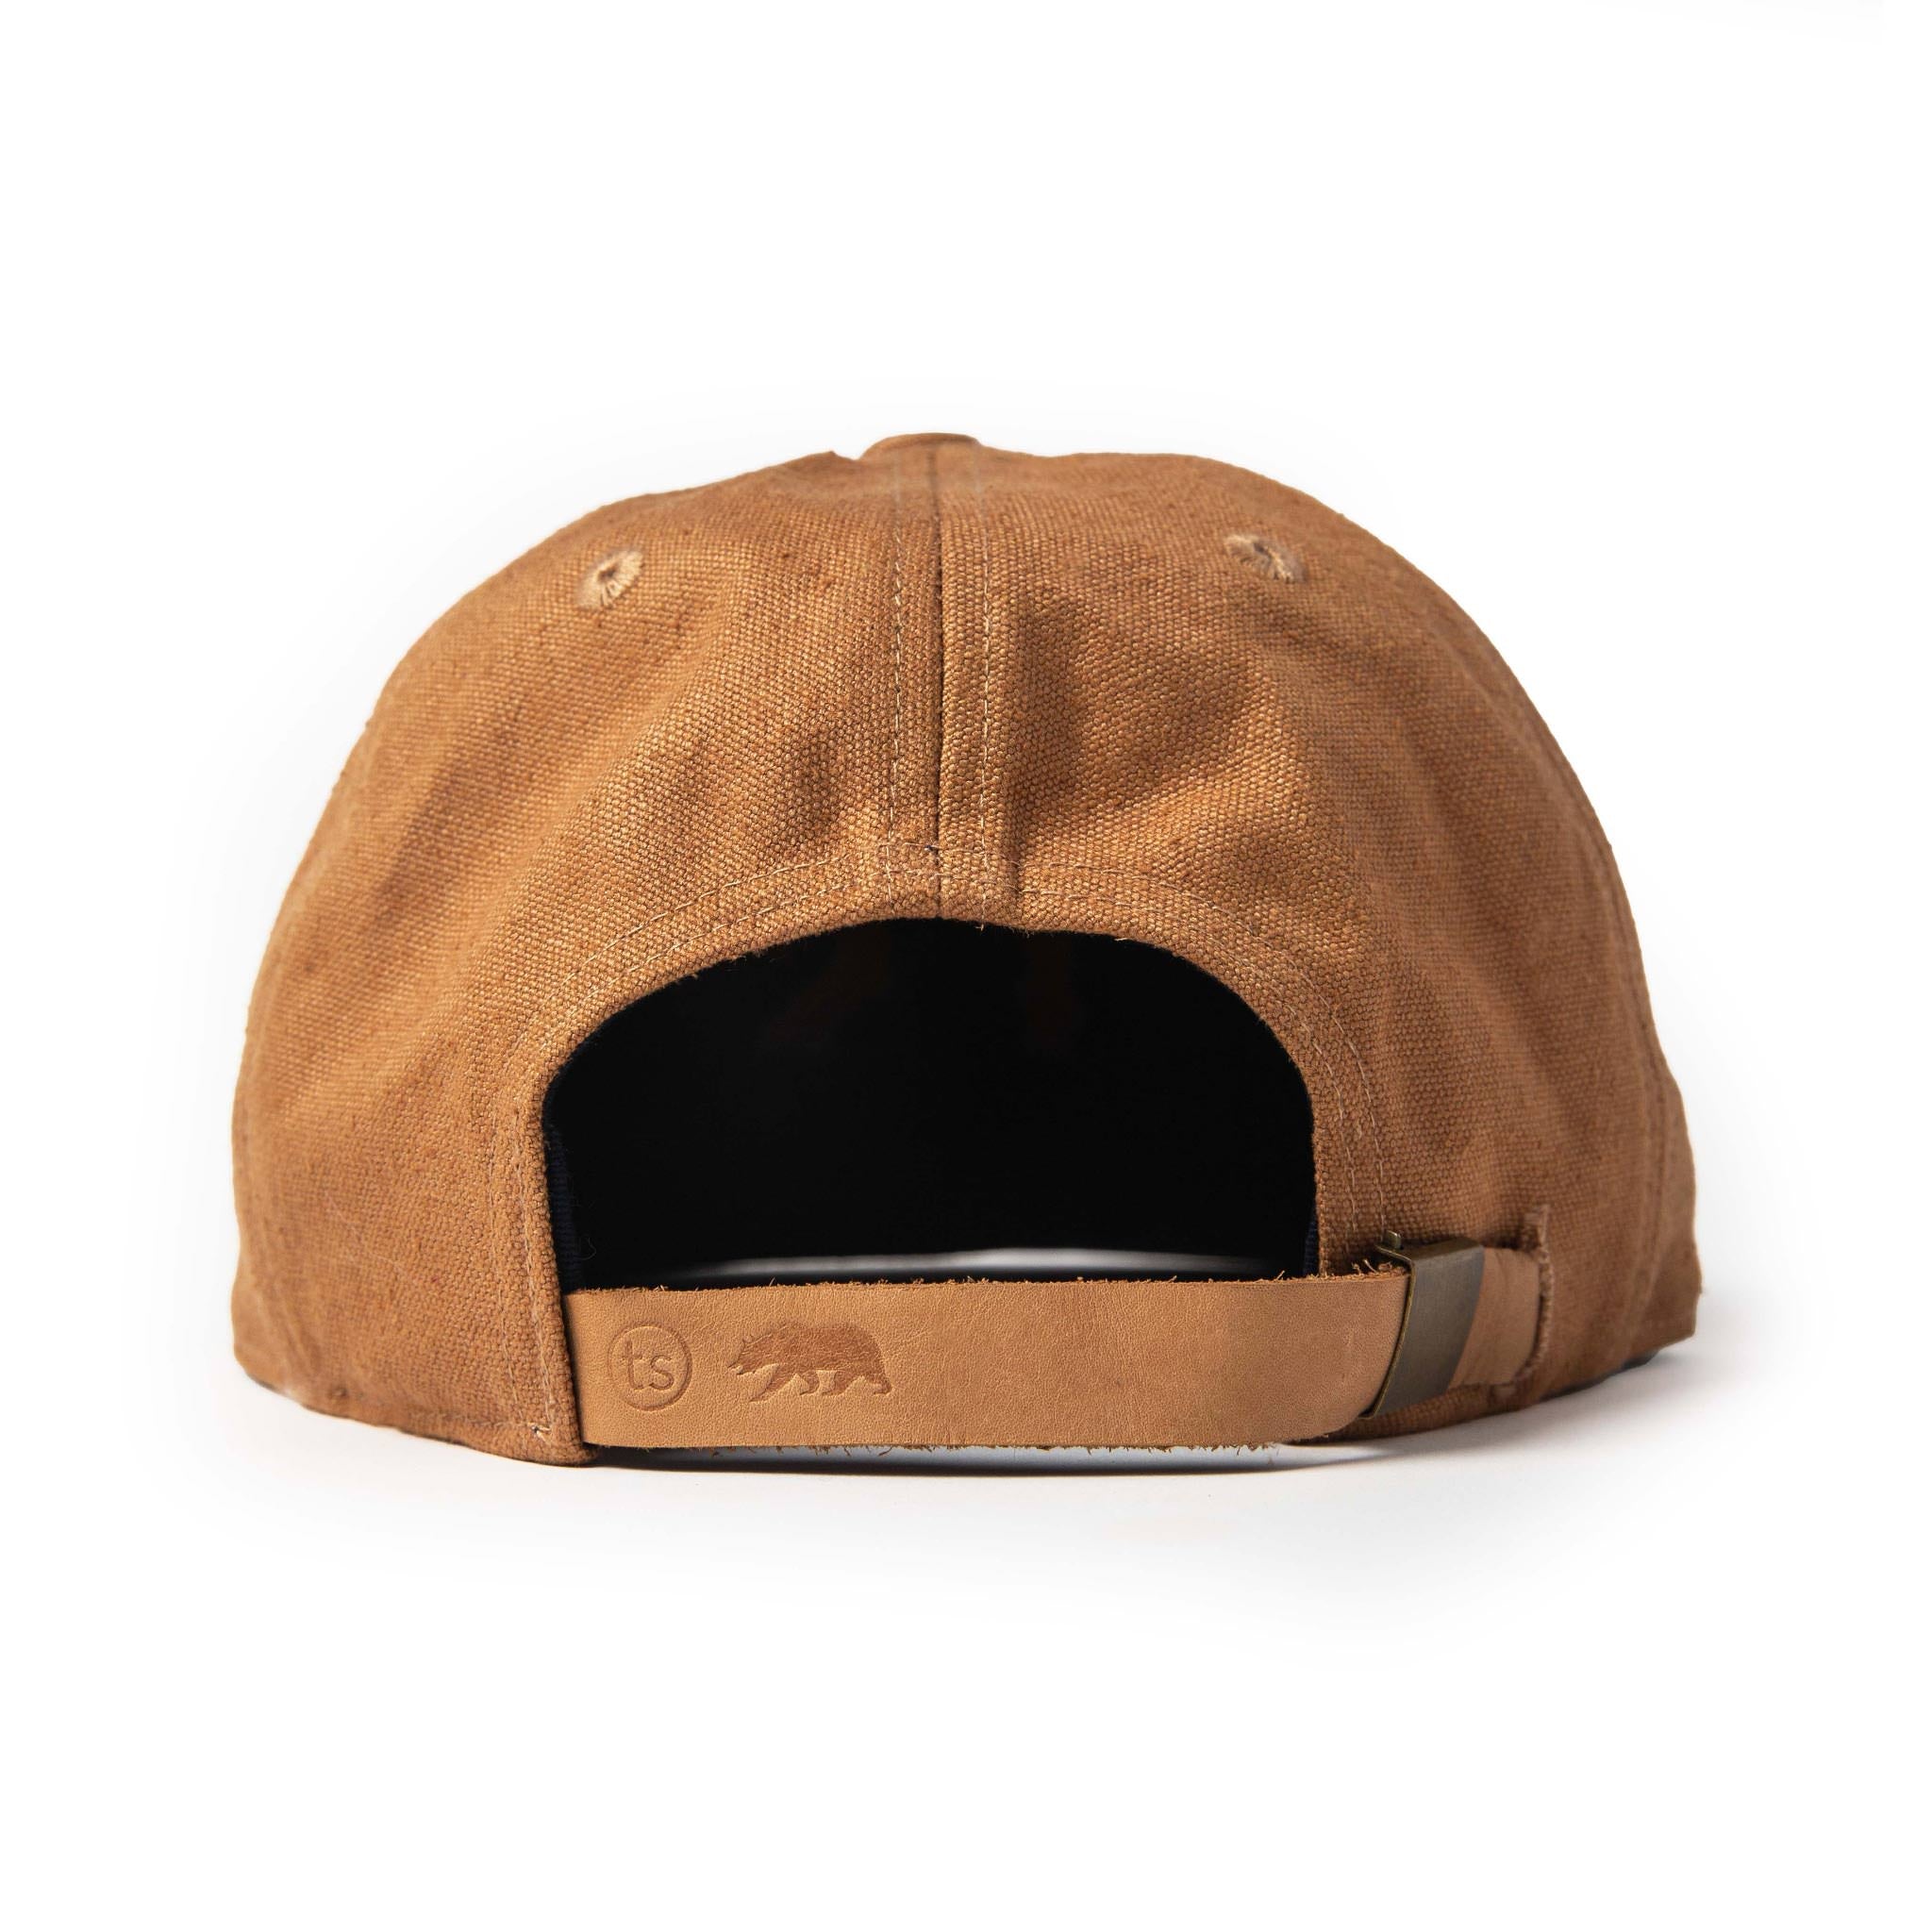 Back to Brown: Hats, hats, hats - Gaslamp Ball